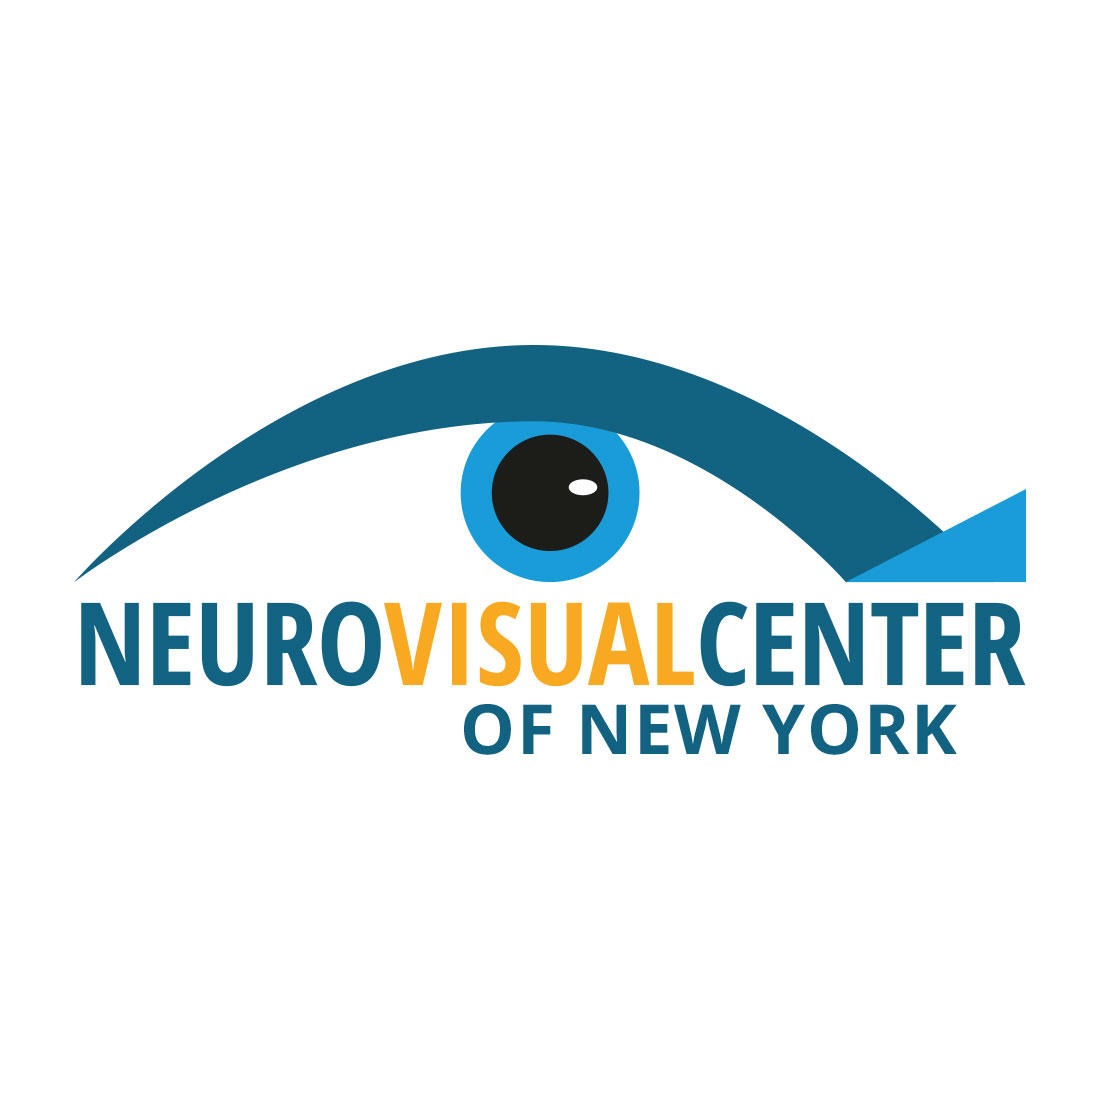 The Neuro Visual Center of New York Logo